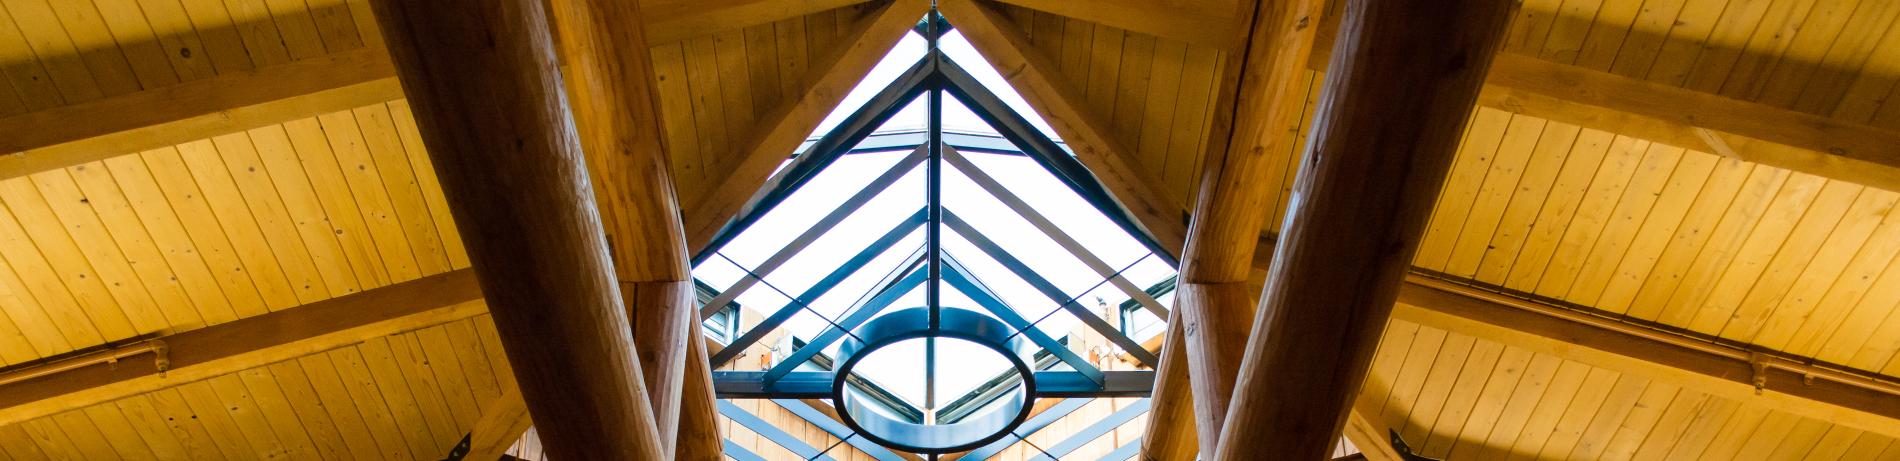 LCC longhouse ceiling beams and skylight